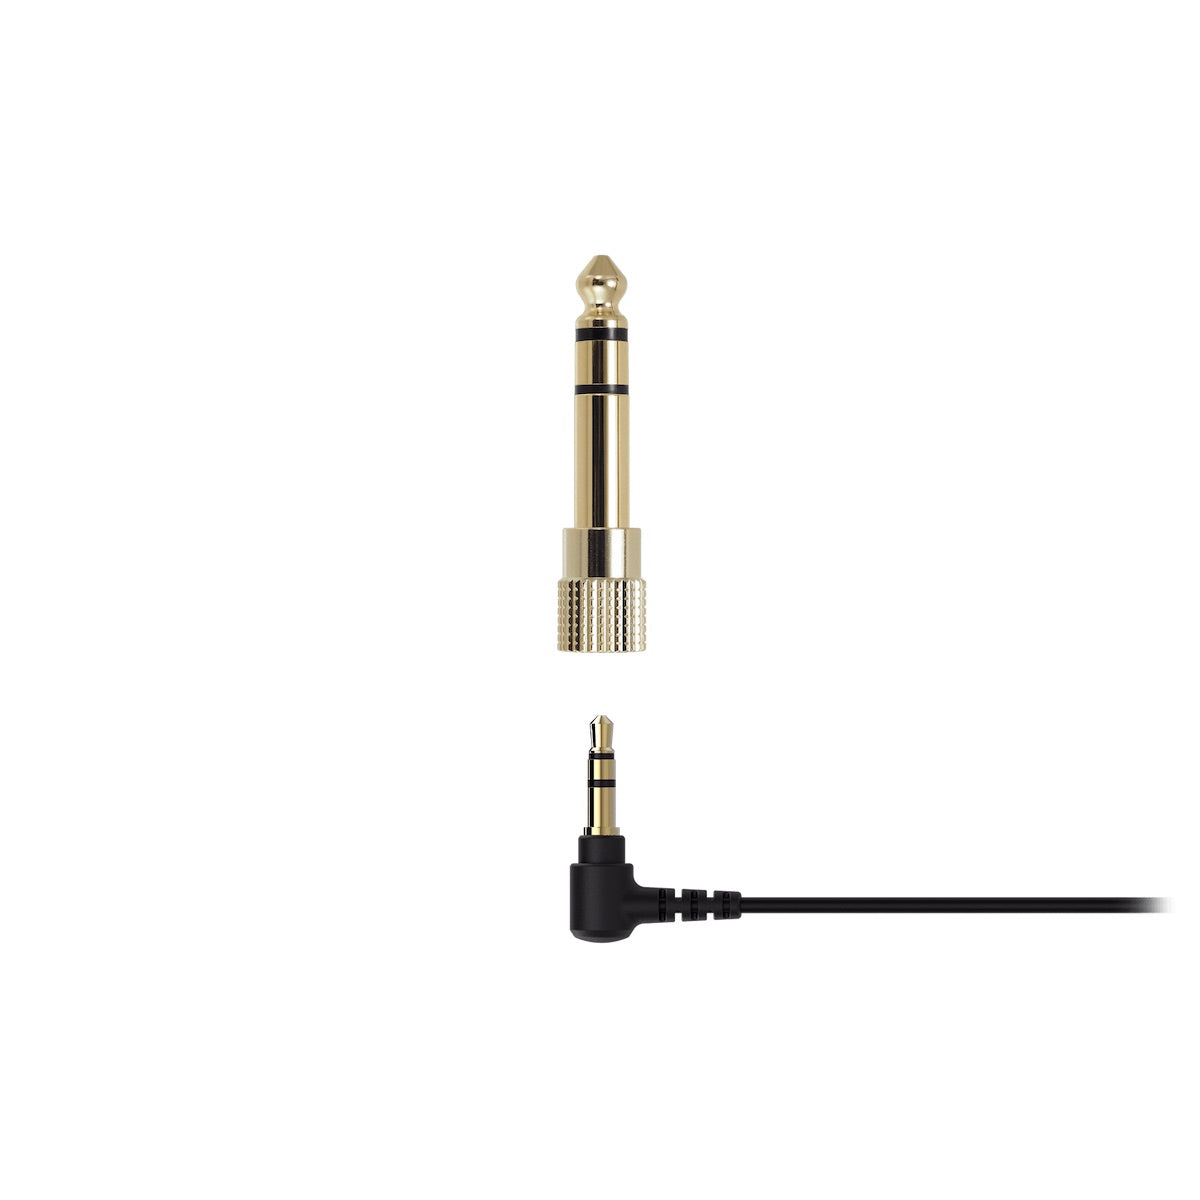 Audio-Technica ATH-E50 - Professional In-Ear Monitor Headphones, 1/4-inch adapter